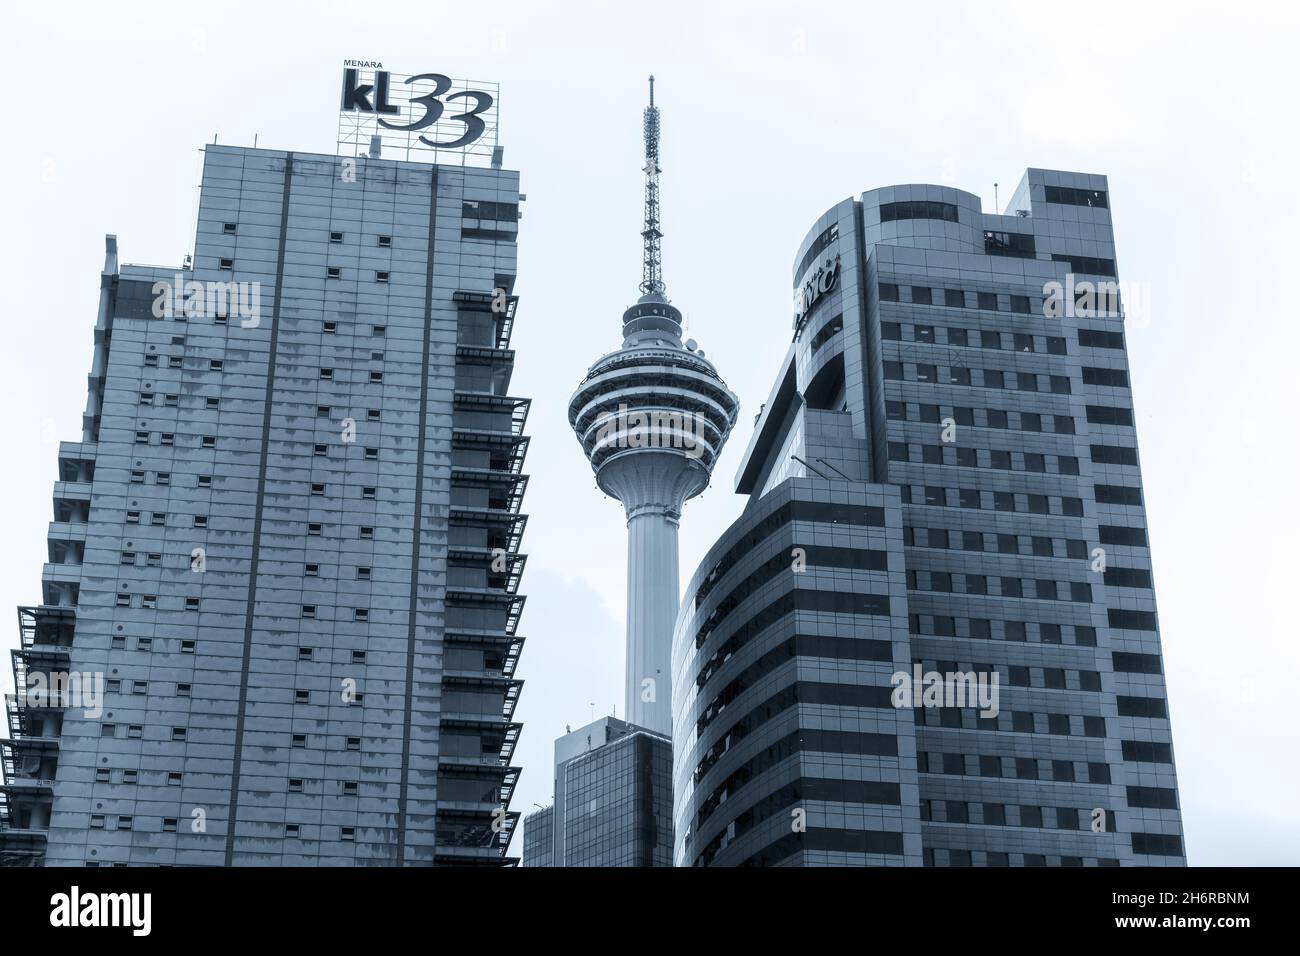 Kuala Lumpur, Malaysia - 25. November 2019: Skyline von Kuala Lumpur mit Bürohochhäusern und Fernsehturm, blauem Fotohintergrund Stockfoto